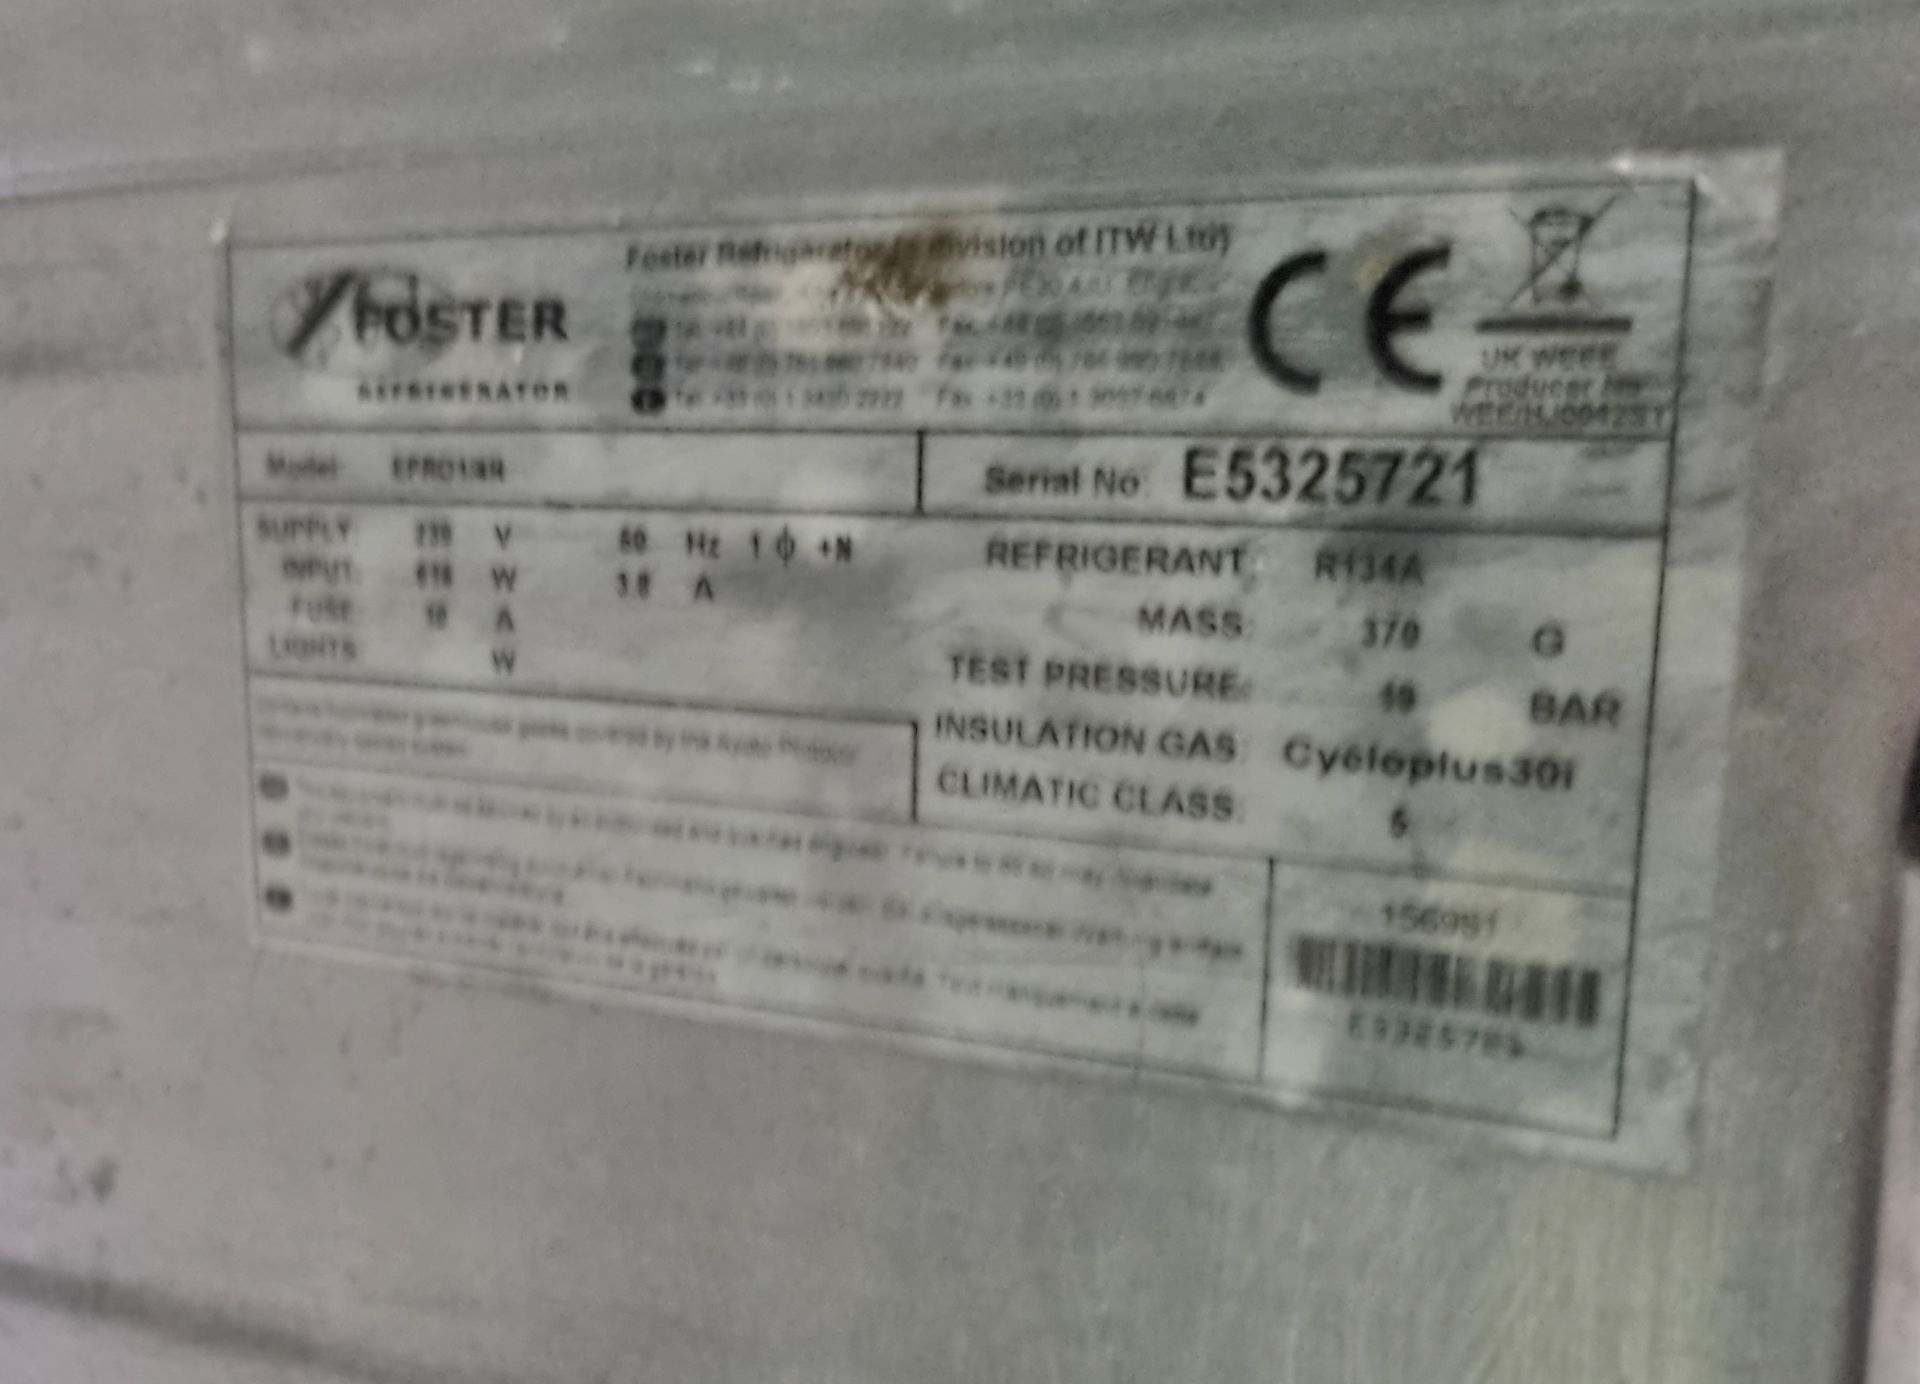 Foster EPRO1/4H refrigerator - L 2320 x W 700 x H 830mm - 4 door - Image 4 of 6